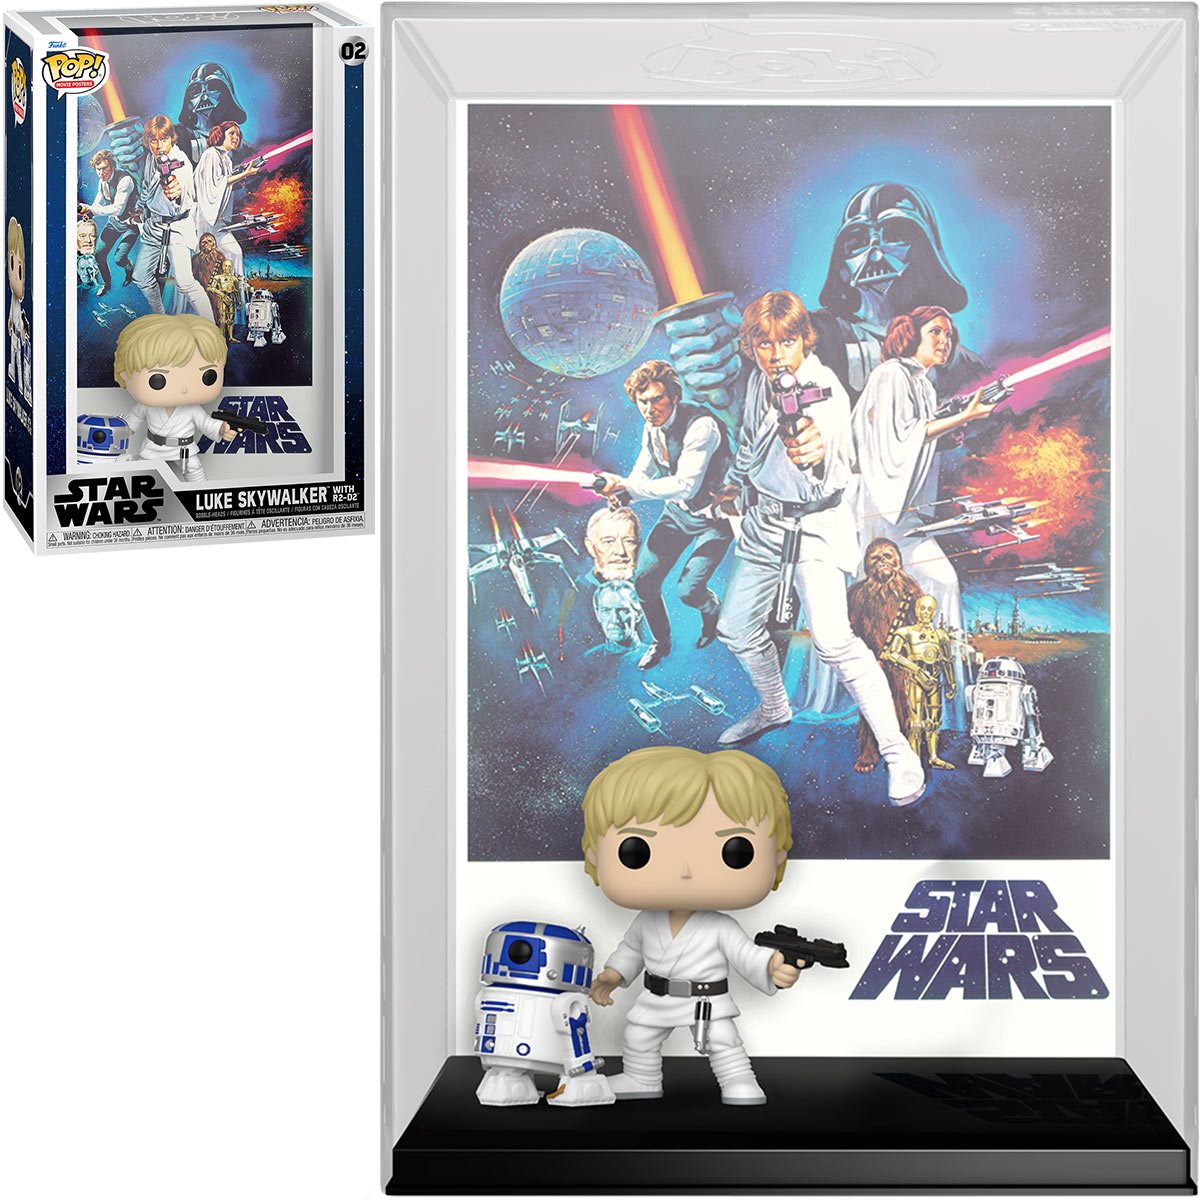 POP Movie Poster: Star Wars Episode IV - A New Hope